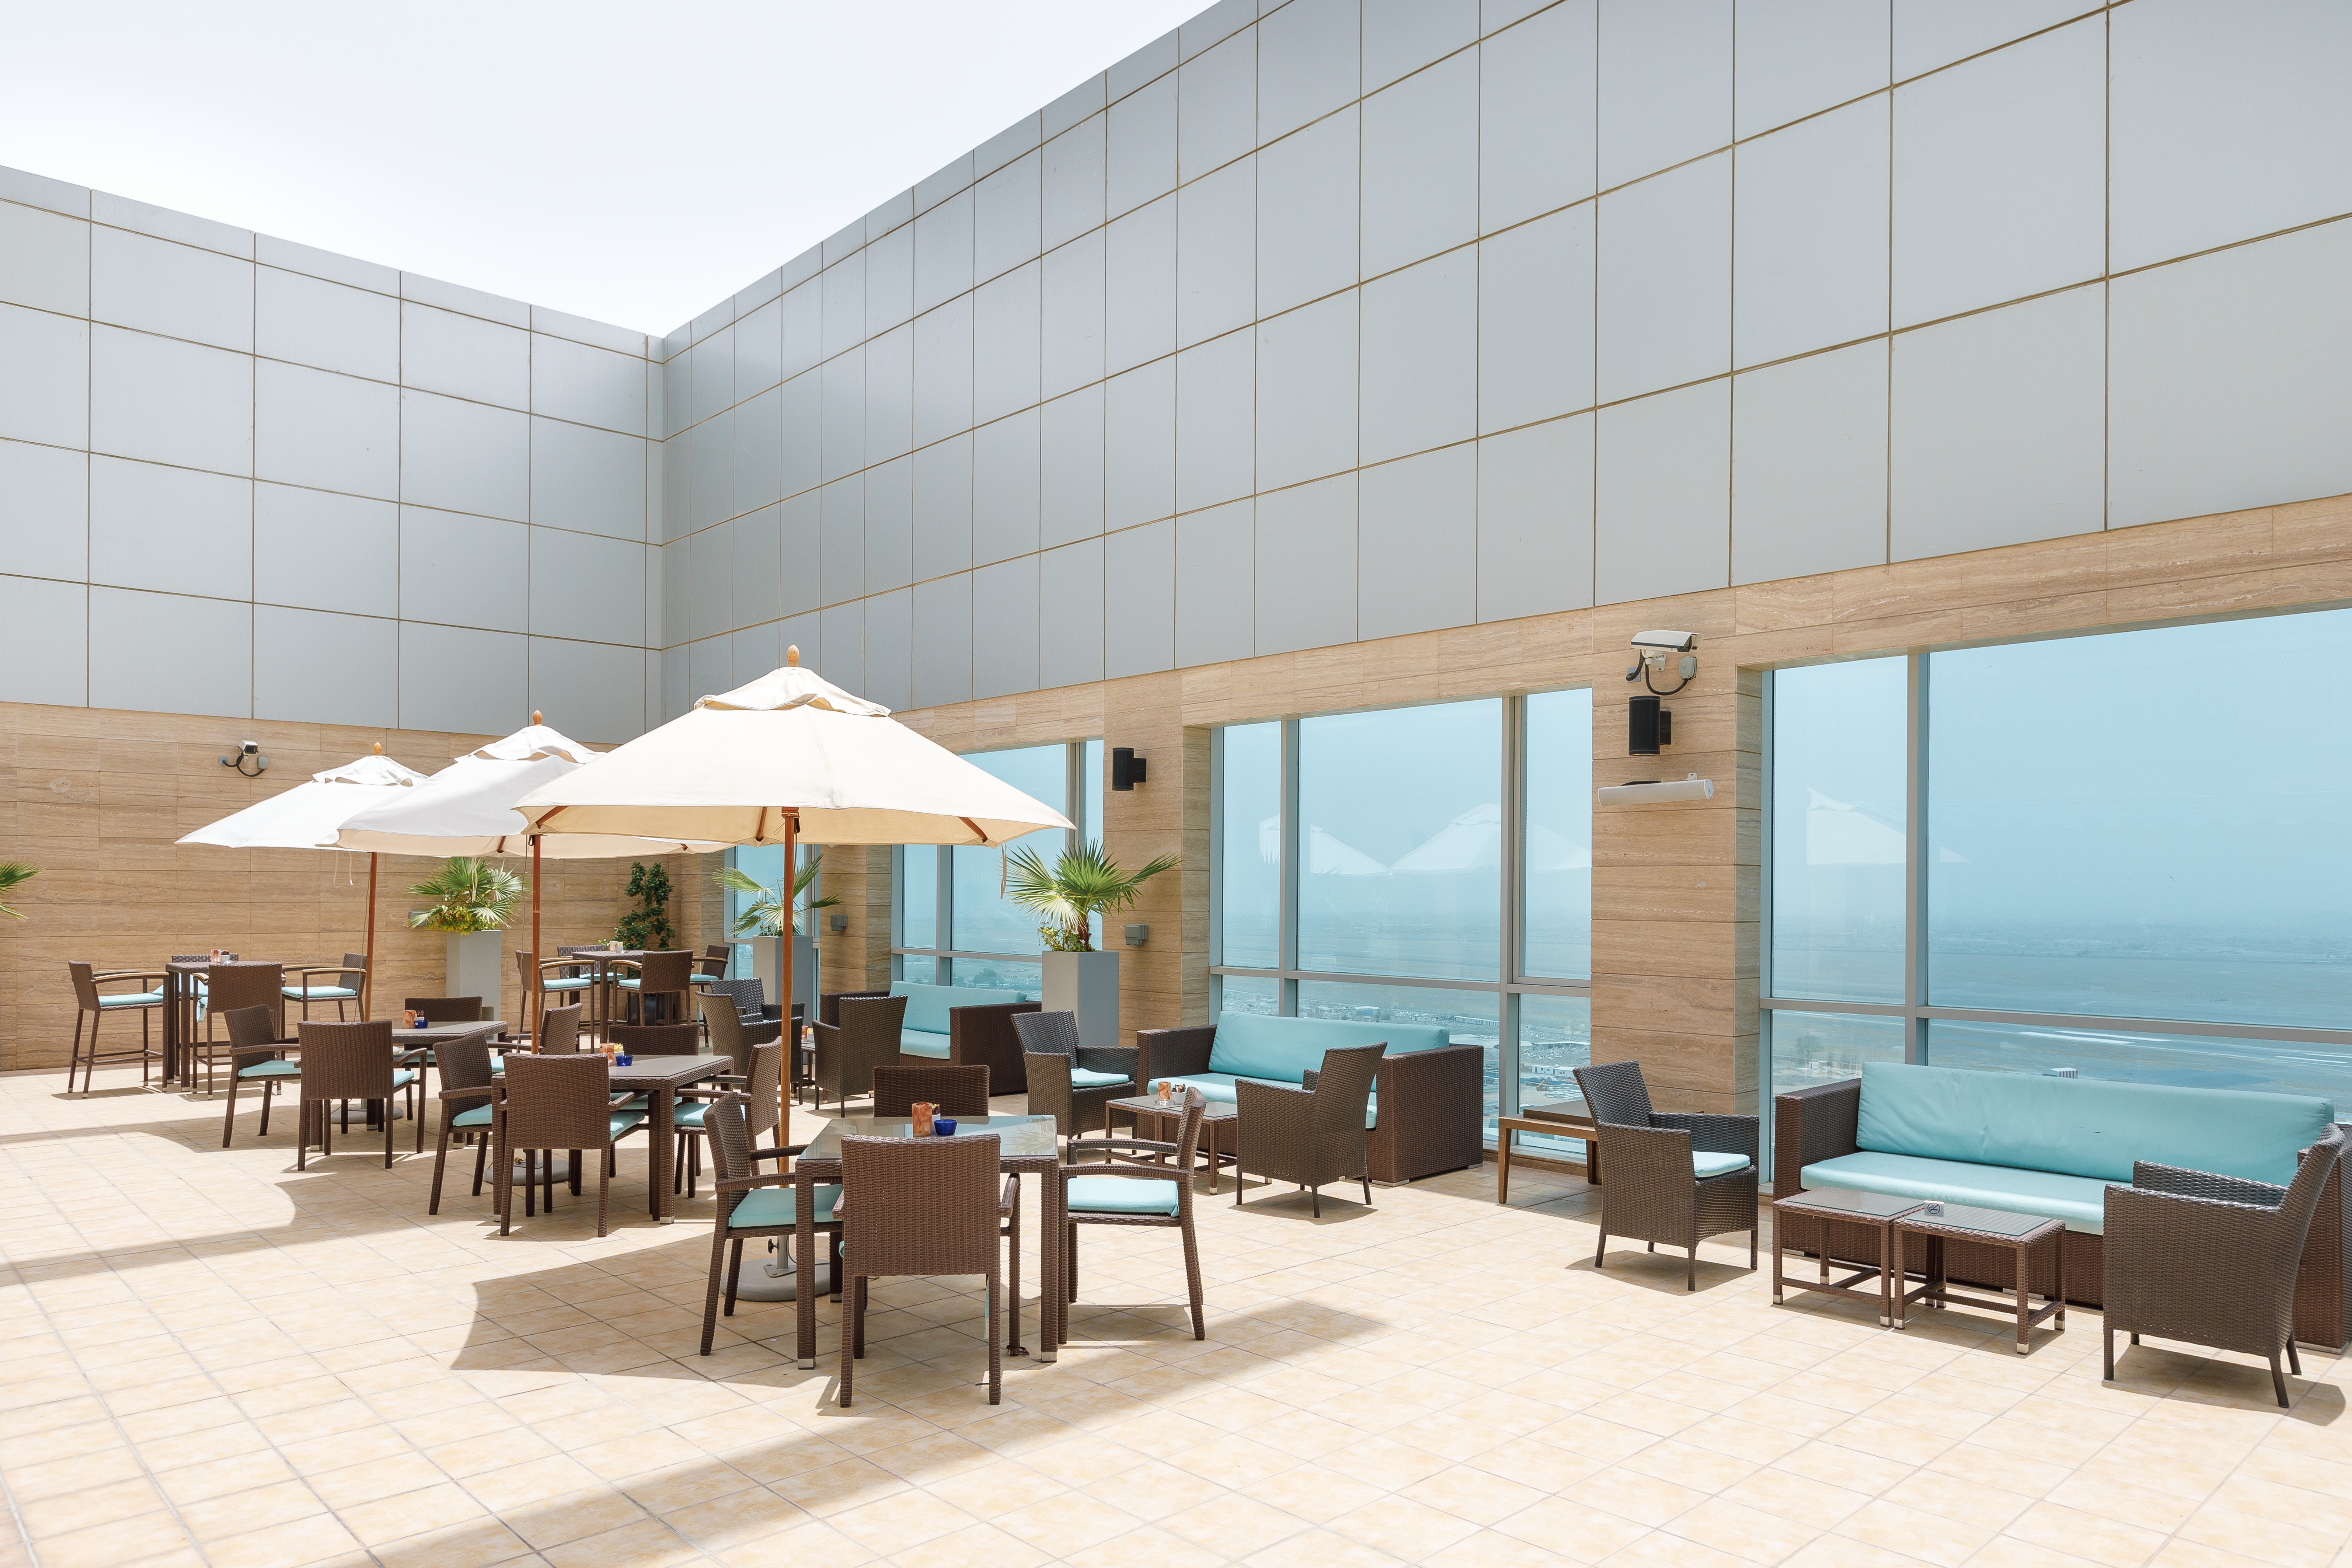 Royal m Hotel Fujairah 5. Отель Royal m Hotel Fujairah Mall Фуджейра ОАЭ. Отель Фуджейра новый 2022 года. Royal hotel фуджейра